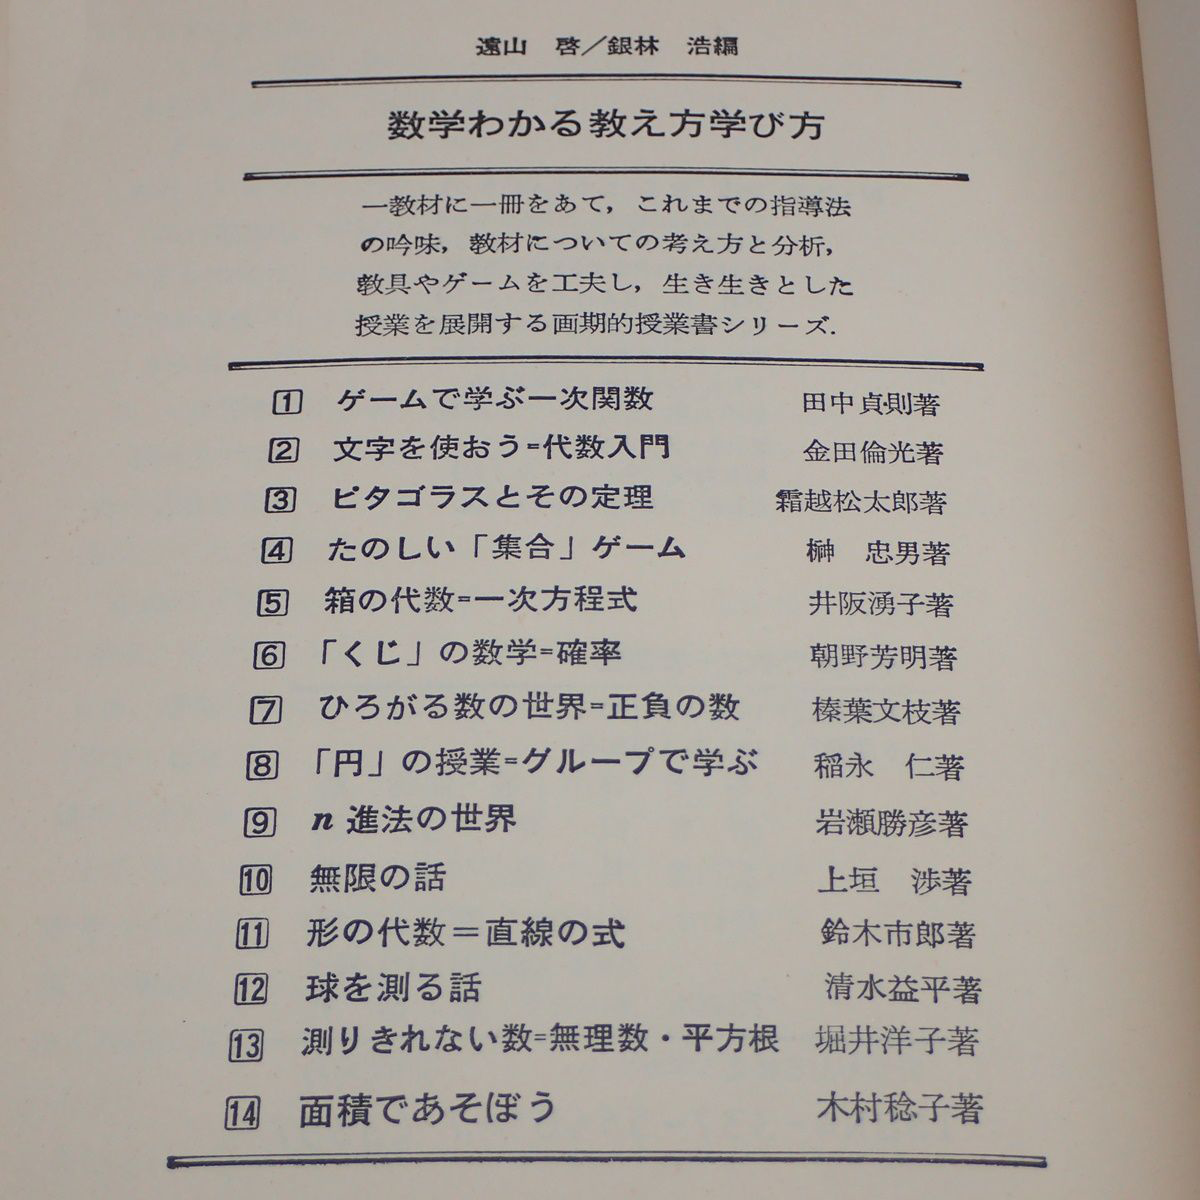 50%OFF 日本フォトコンテスト 1975年3月号 山口百恵 表紙